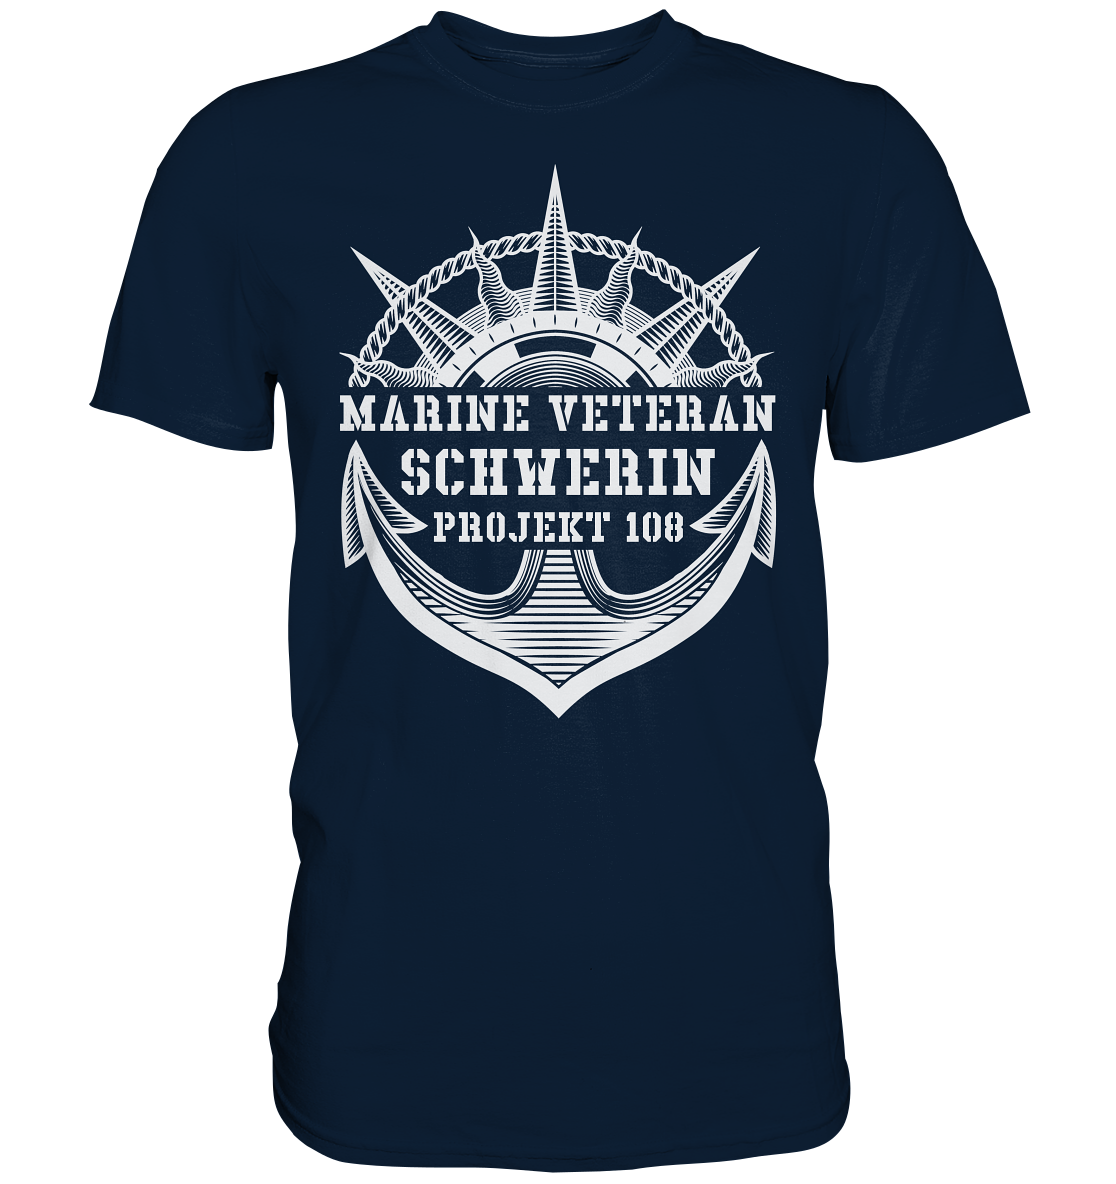 Projekt 108 SCHWERIN Marine Veteran - Premium Shirt